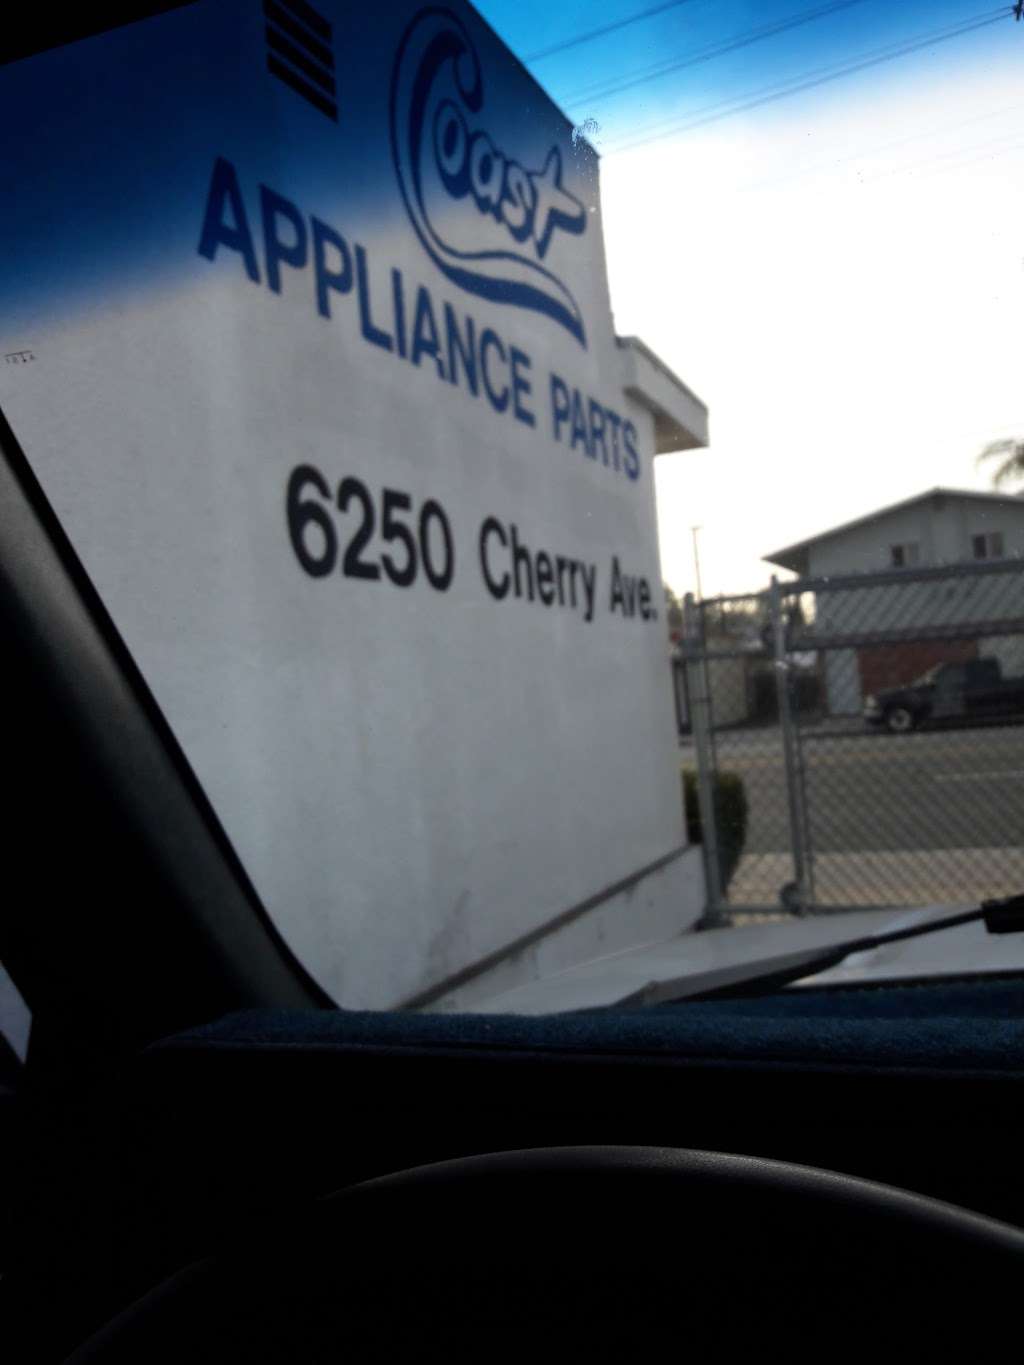 Coast Appliance Parts Co | 6250 Cherry Ave, Long Beach, CA 90805, USA | Phone: (562) 423-8688